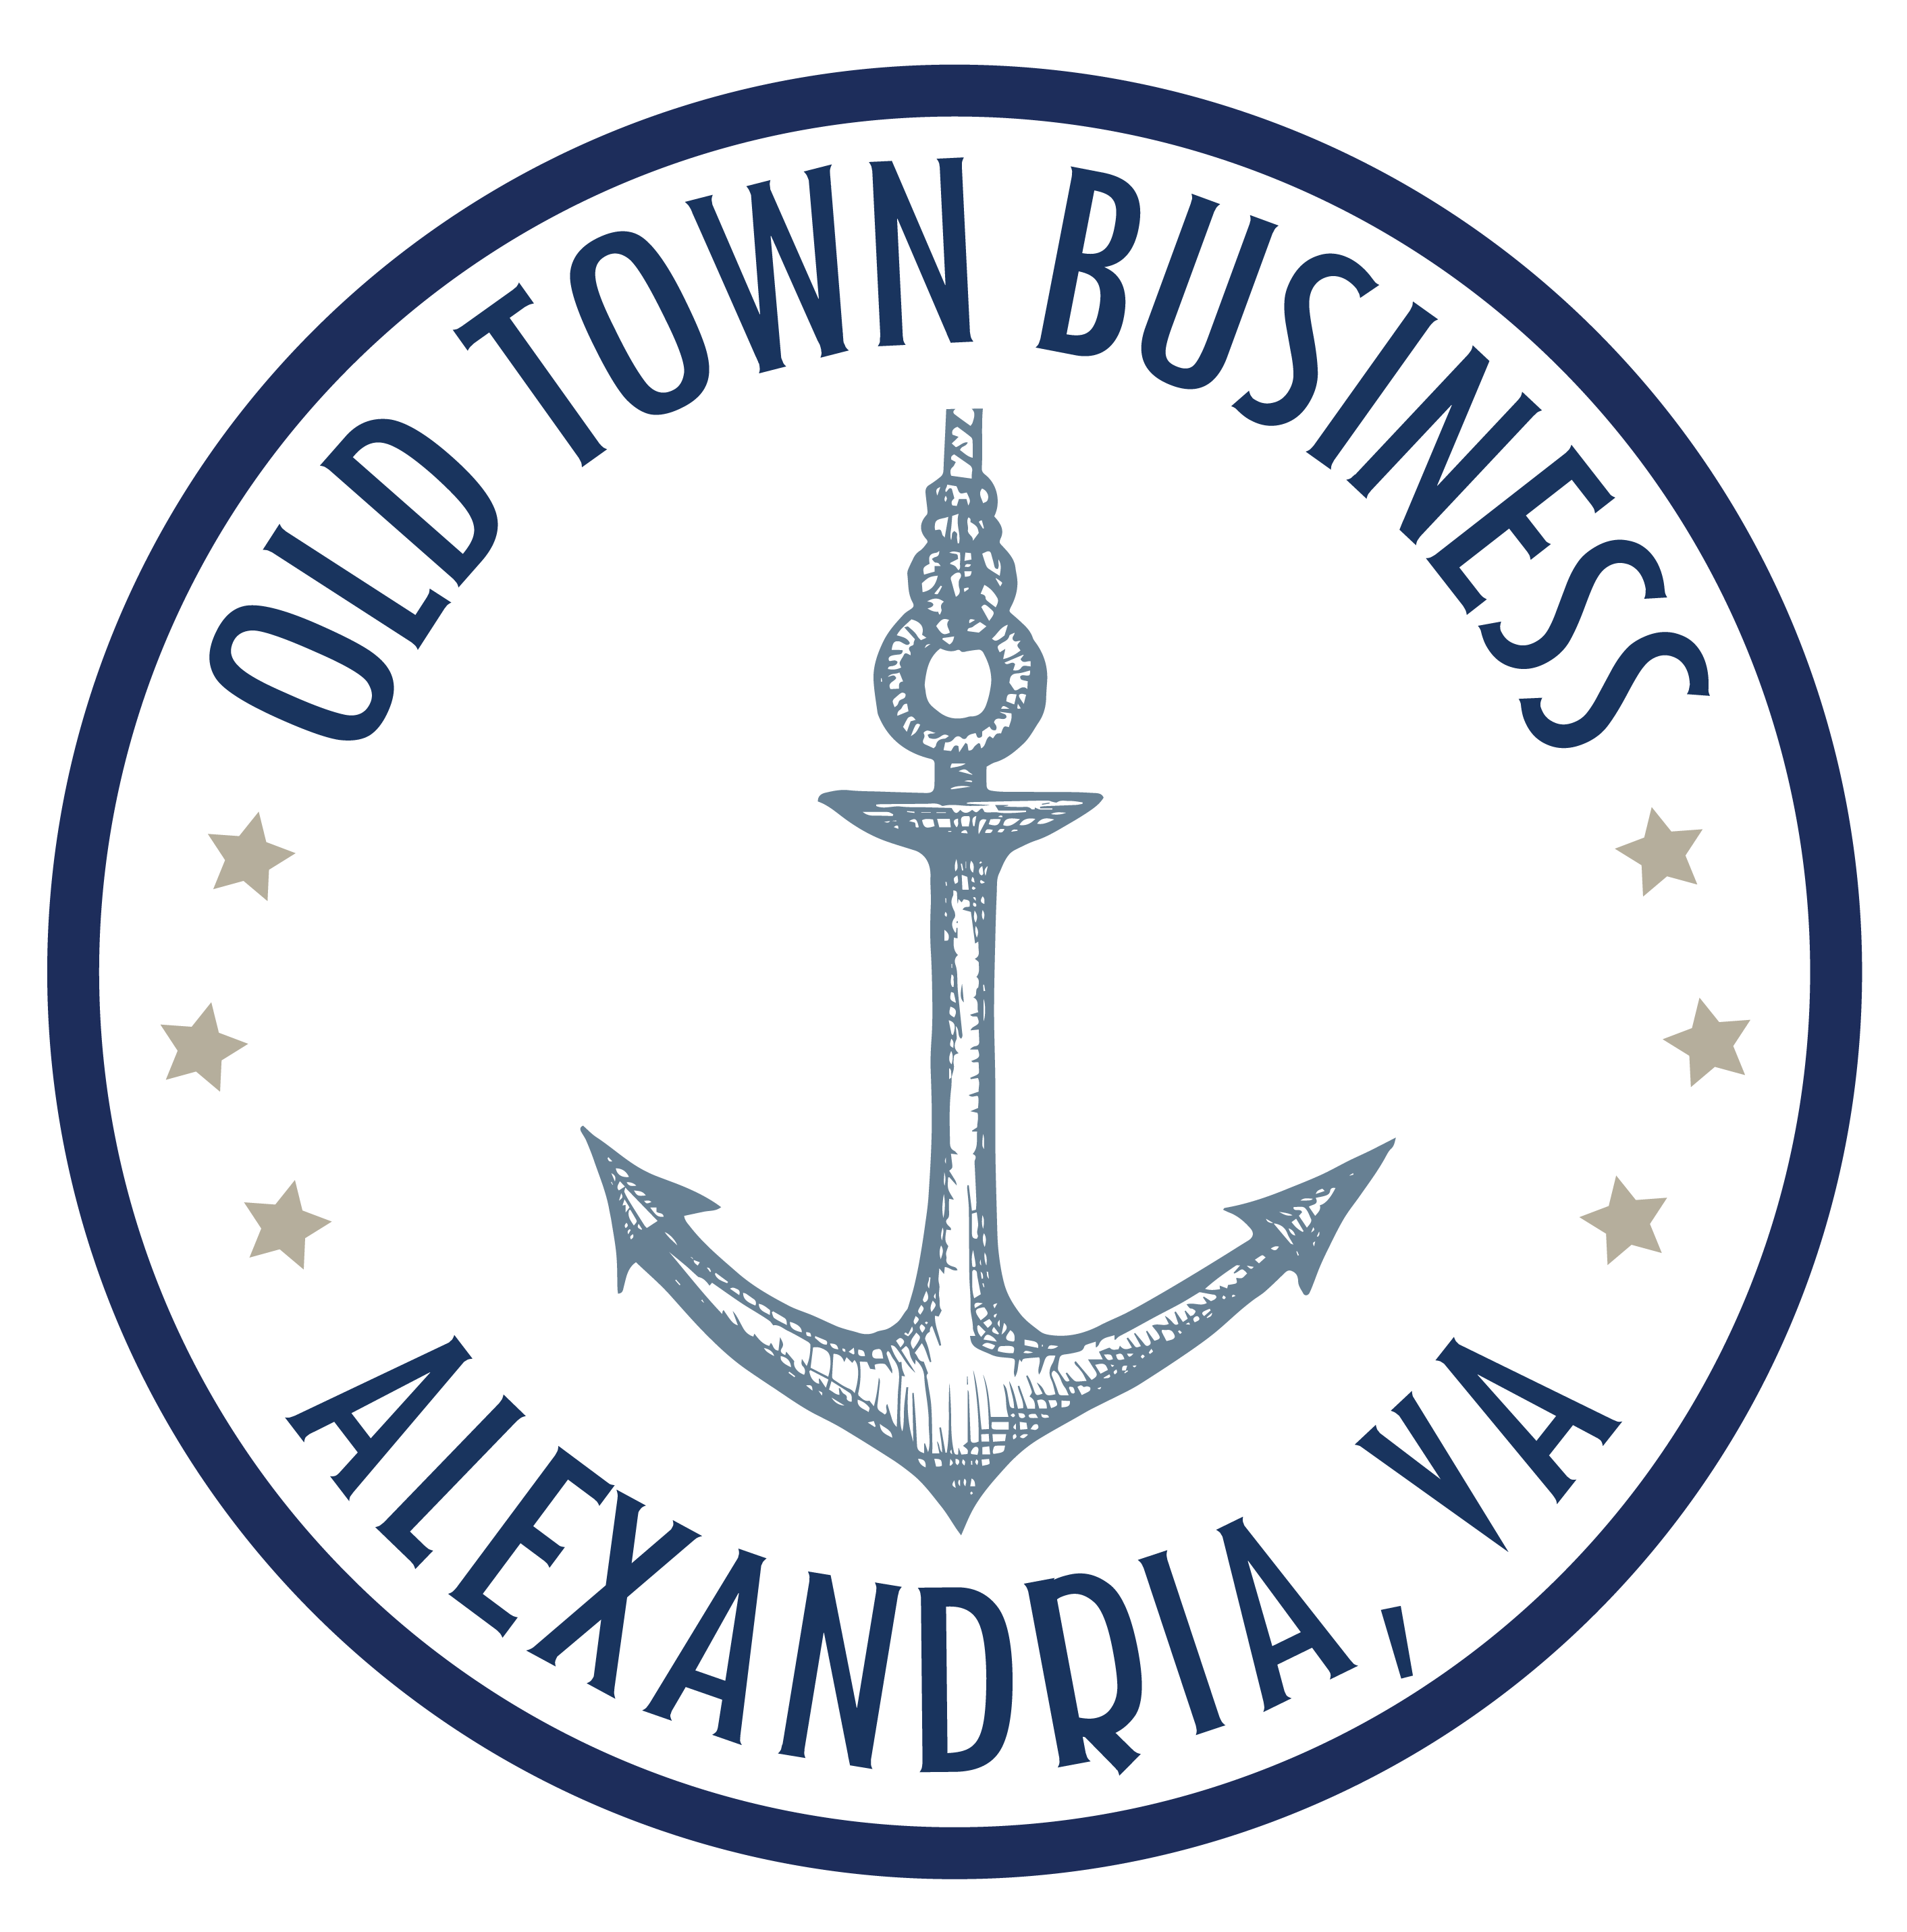 Old Town Business - Alexandria, VA